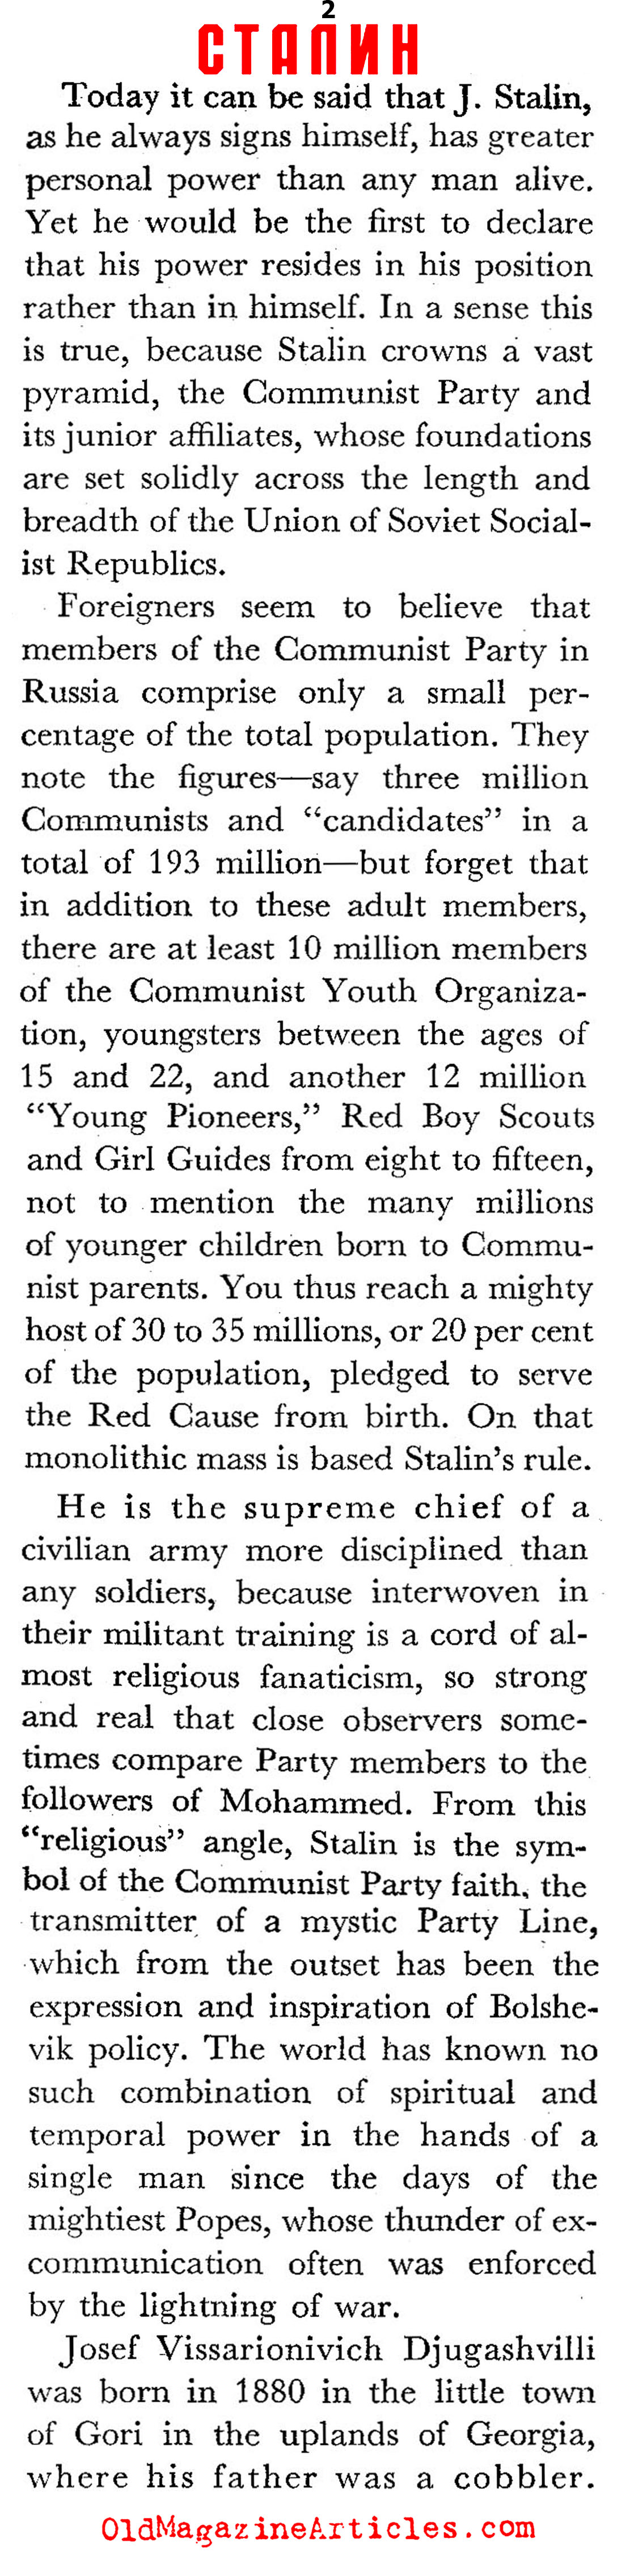 The Optimist's Joseph Stalin (Coronet Magazine, 1943)